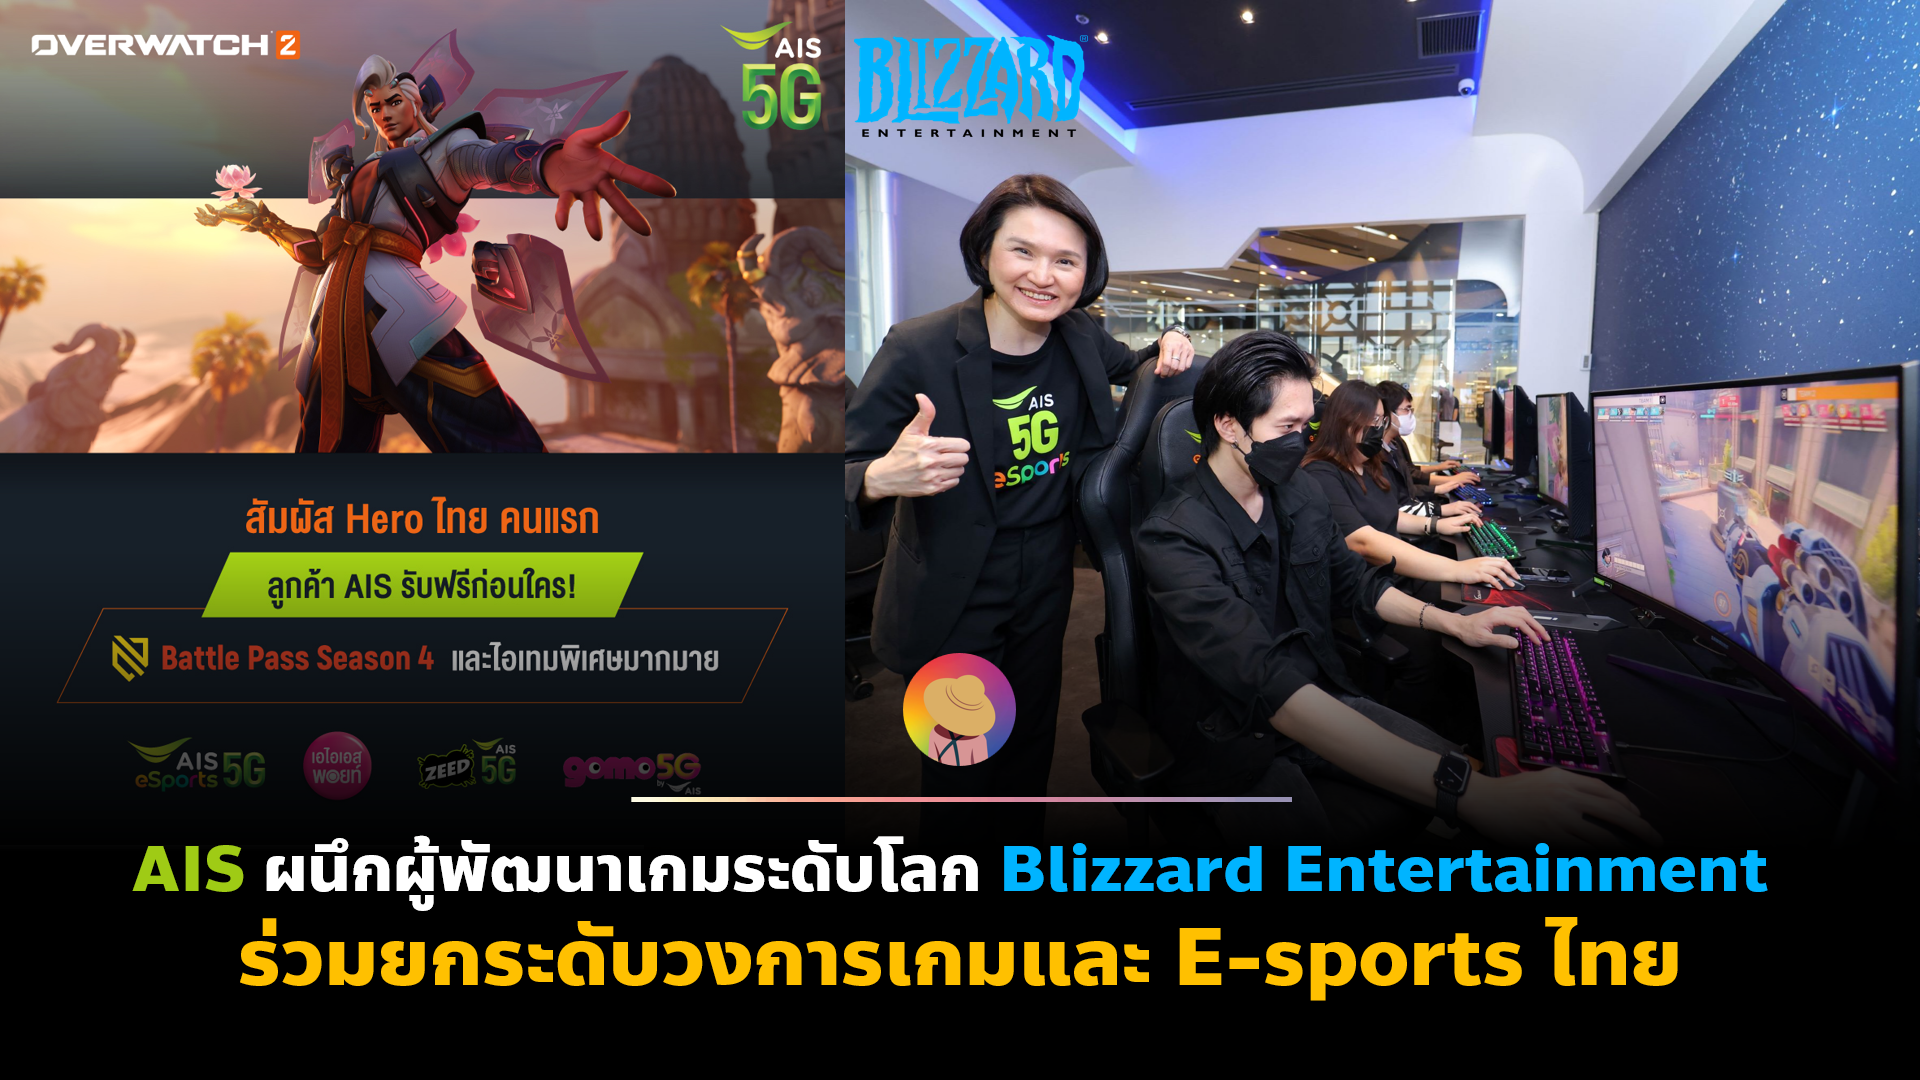 AIS ผนึกผู้พัฒนาเกมระดับโลก Blizzard Entertainment ร่วมยกระดับวงการเกมและ E-sports ไทย